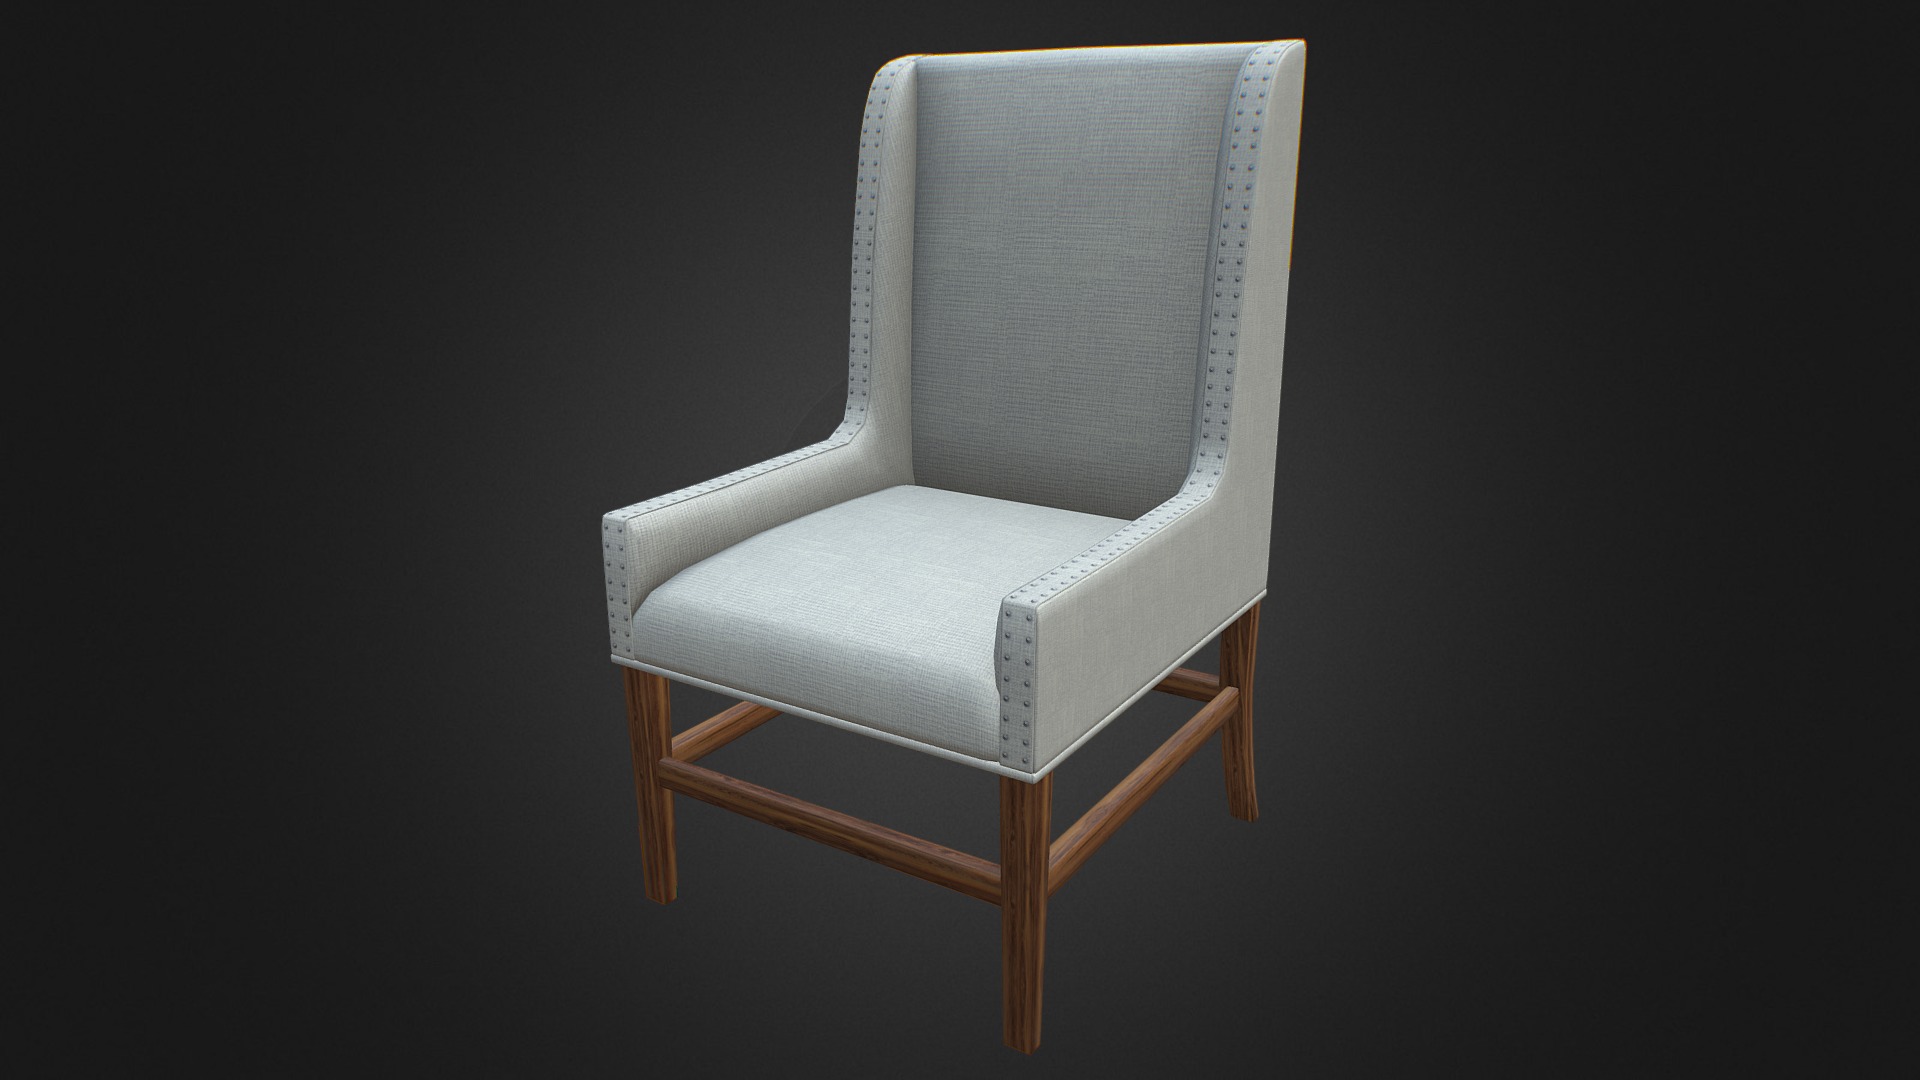 3D model Uttermost Dalma Tan Linen Wing Chair - This is a 3D model of the Uttermost Dalma Tan Linen Wing Chair. The 3D model is about a white chair with a black background.